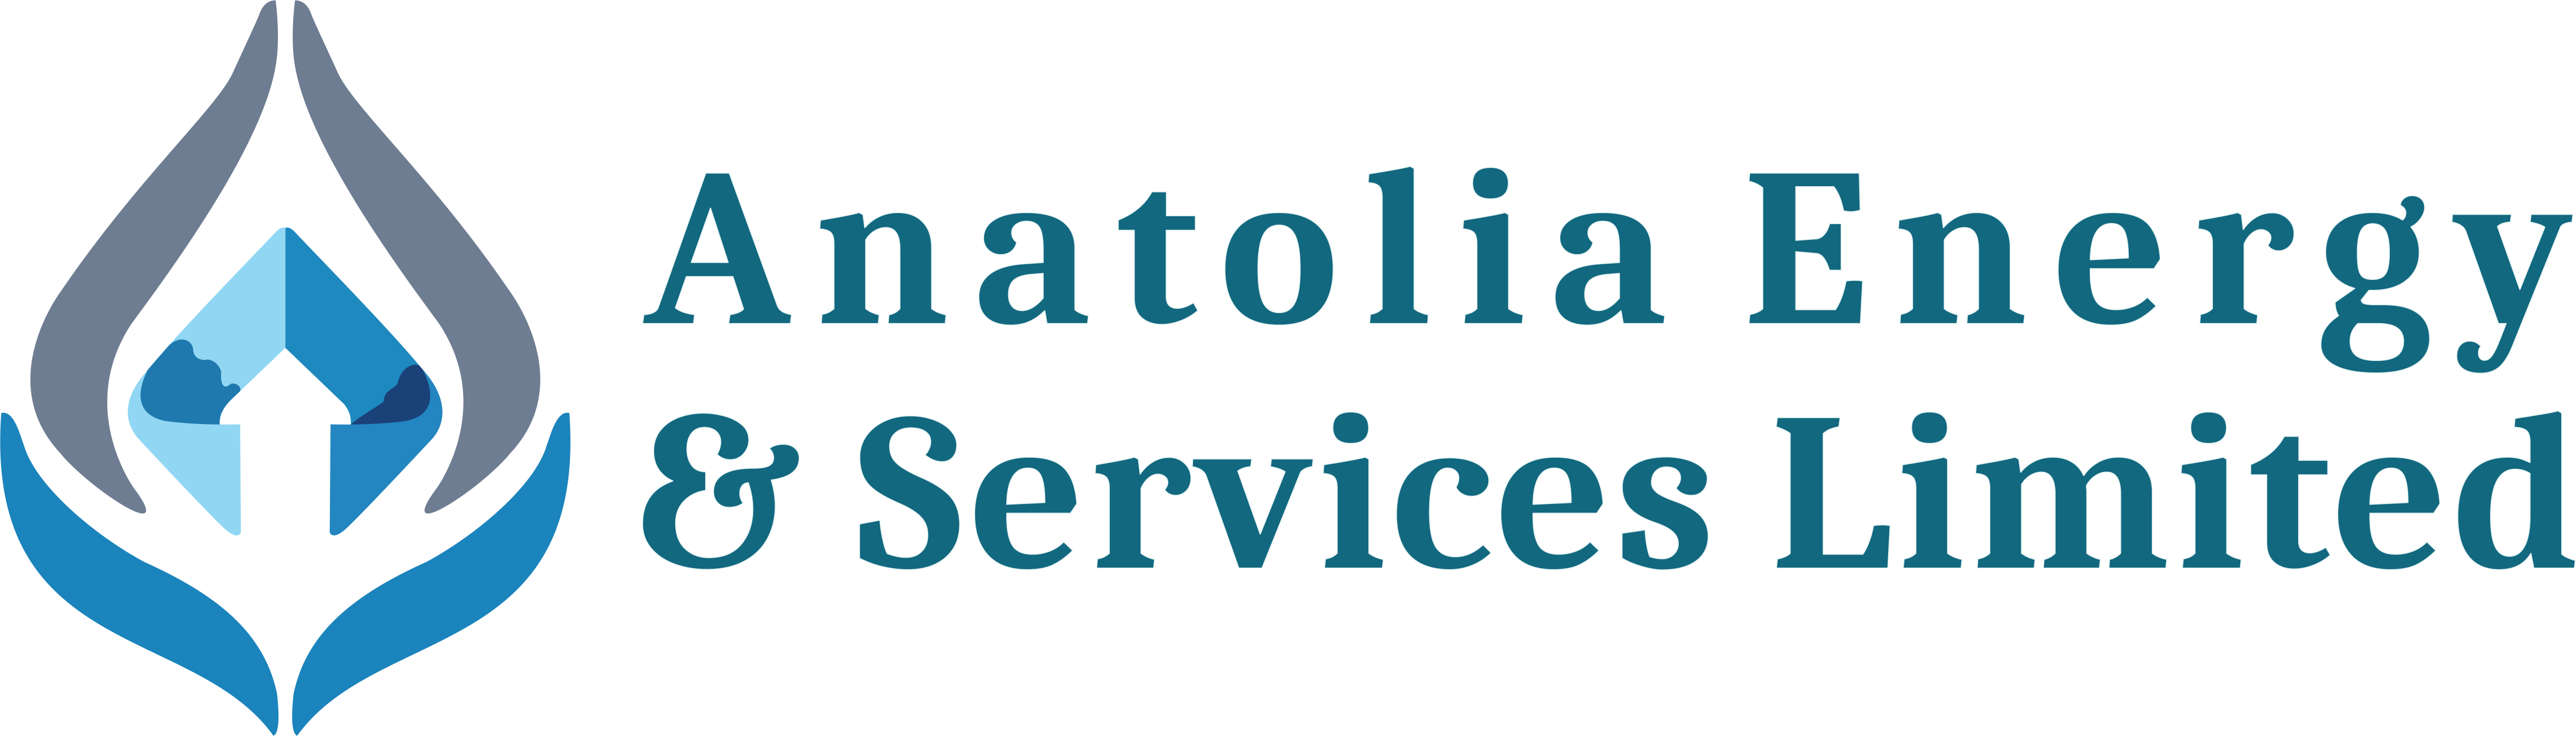 Anatolia Energy & Services Limited